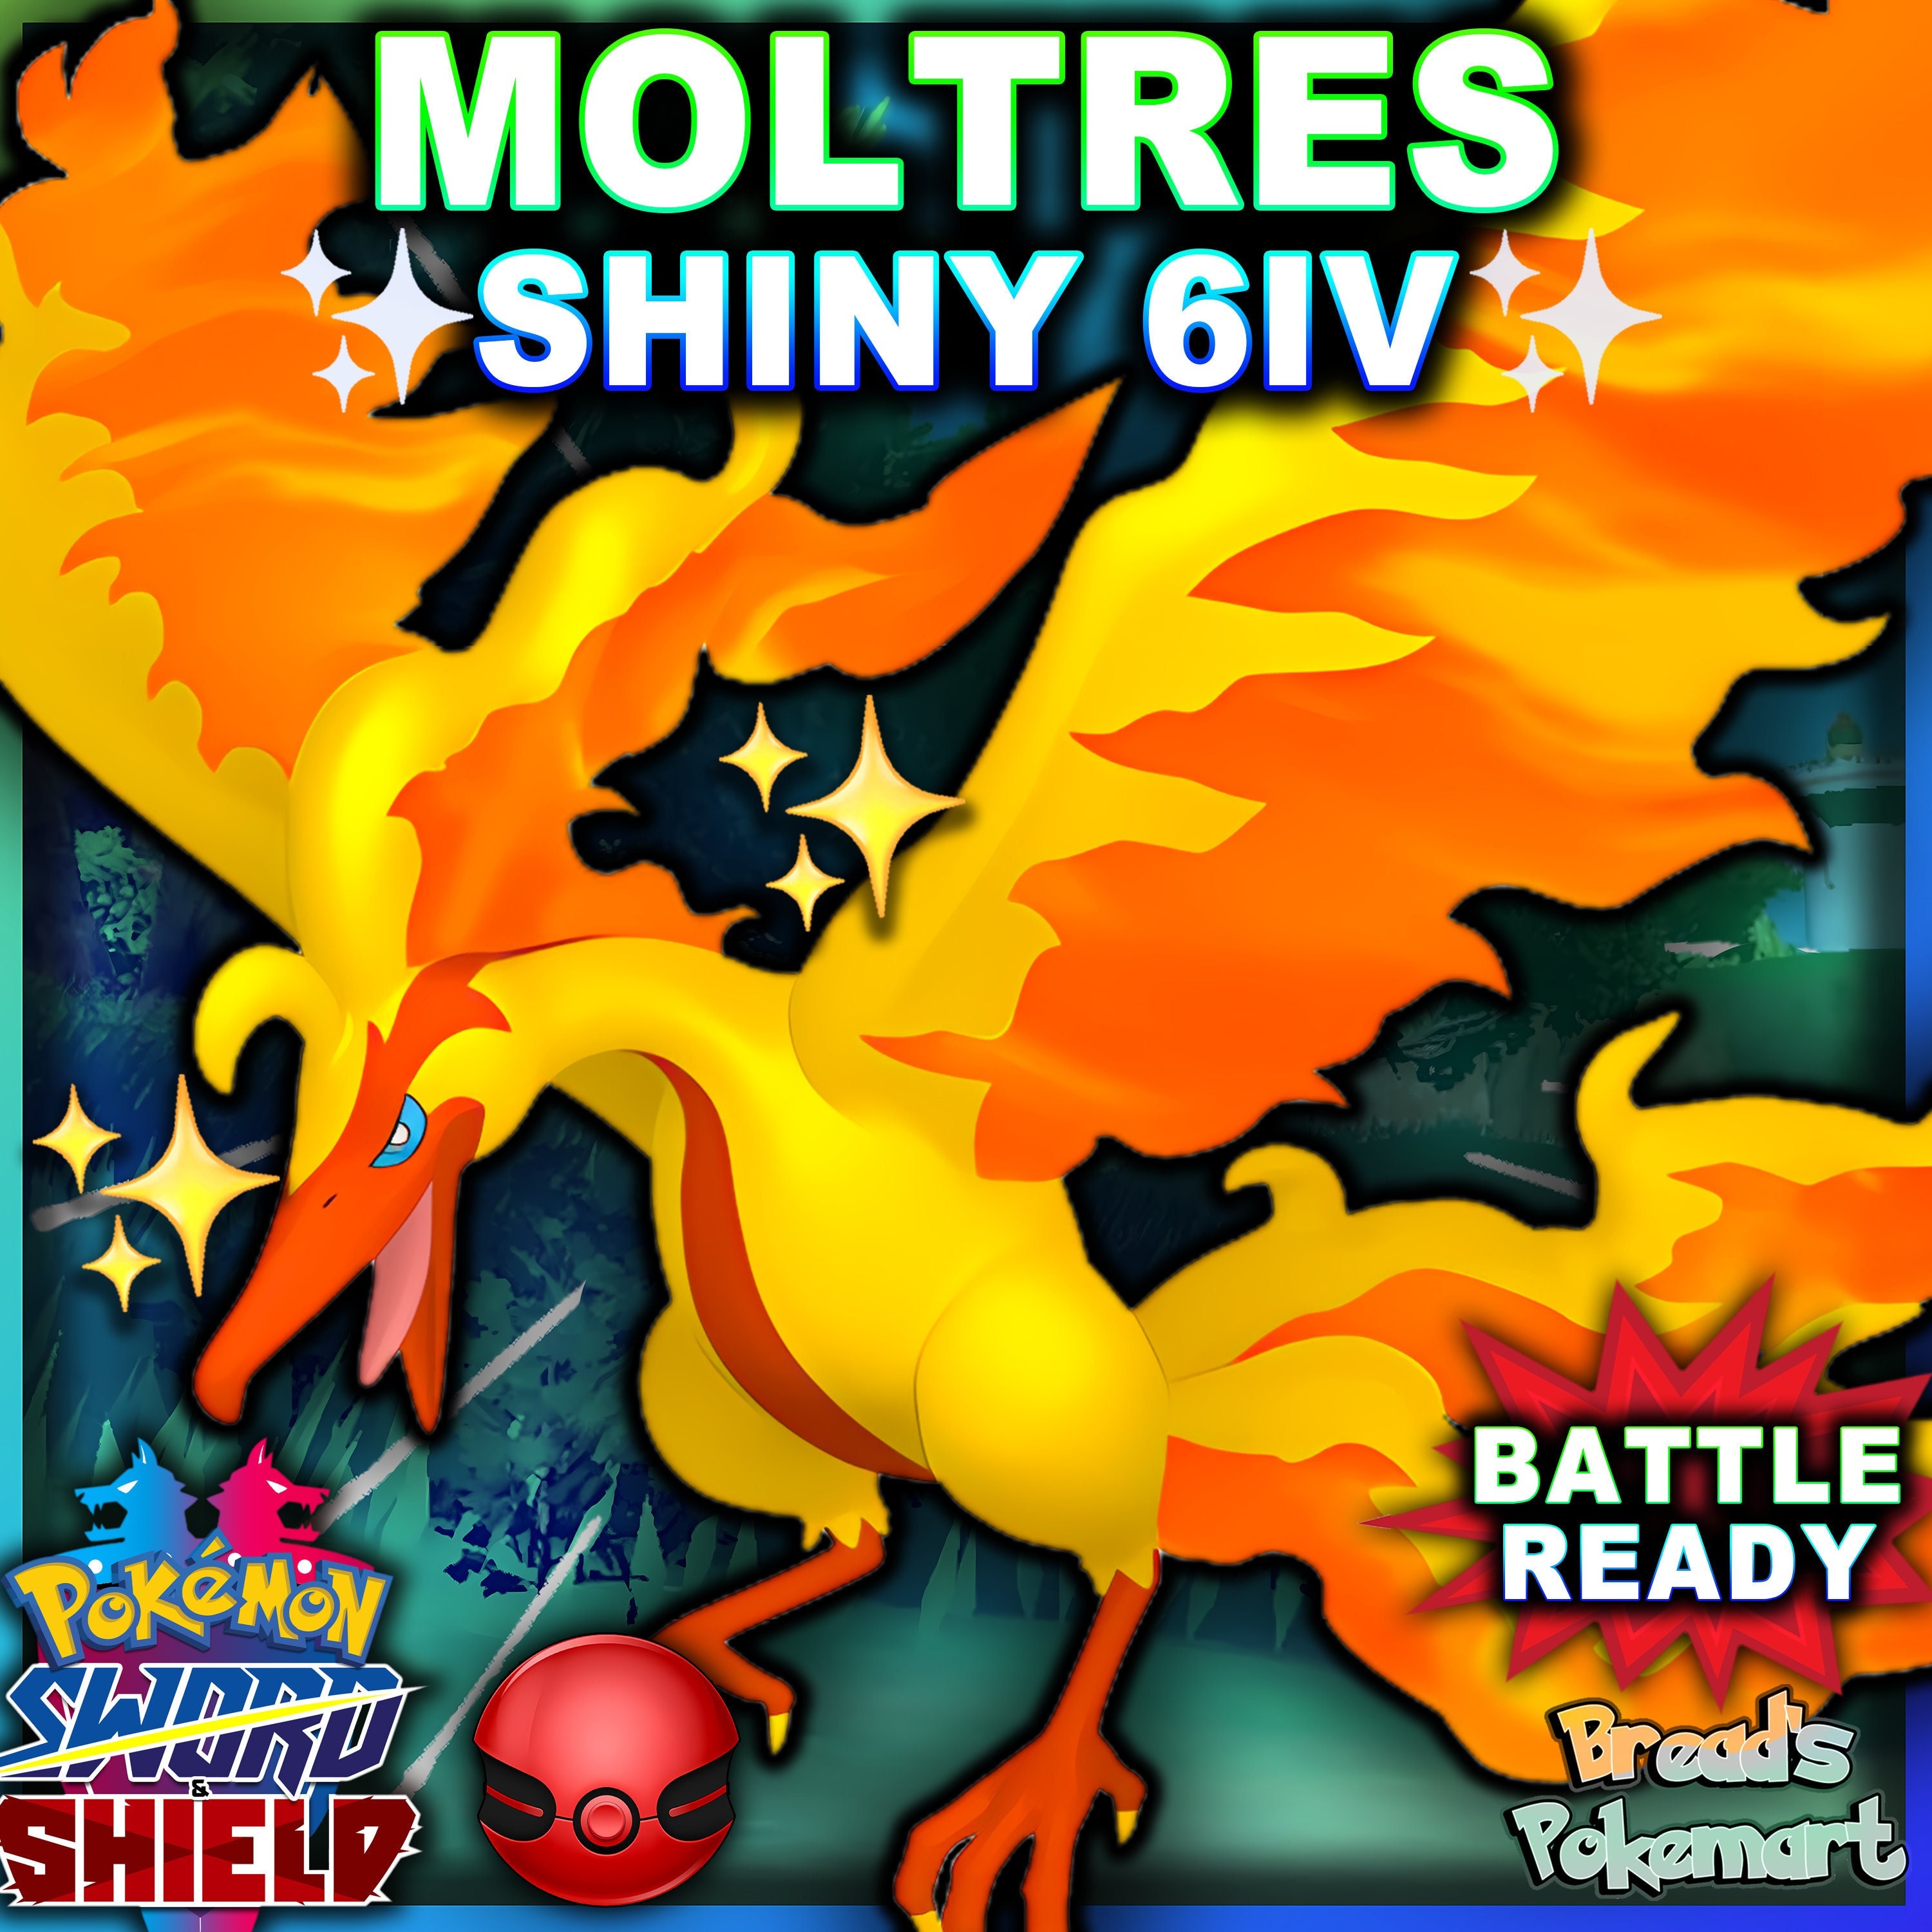 Pokemon Sword and Shield // Ultra Shiny MOLTRES 6IV Event 